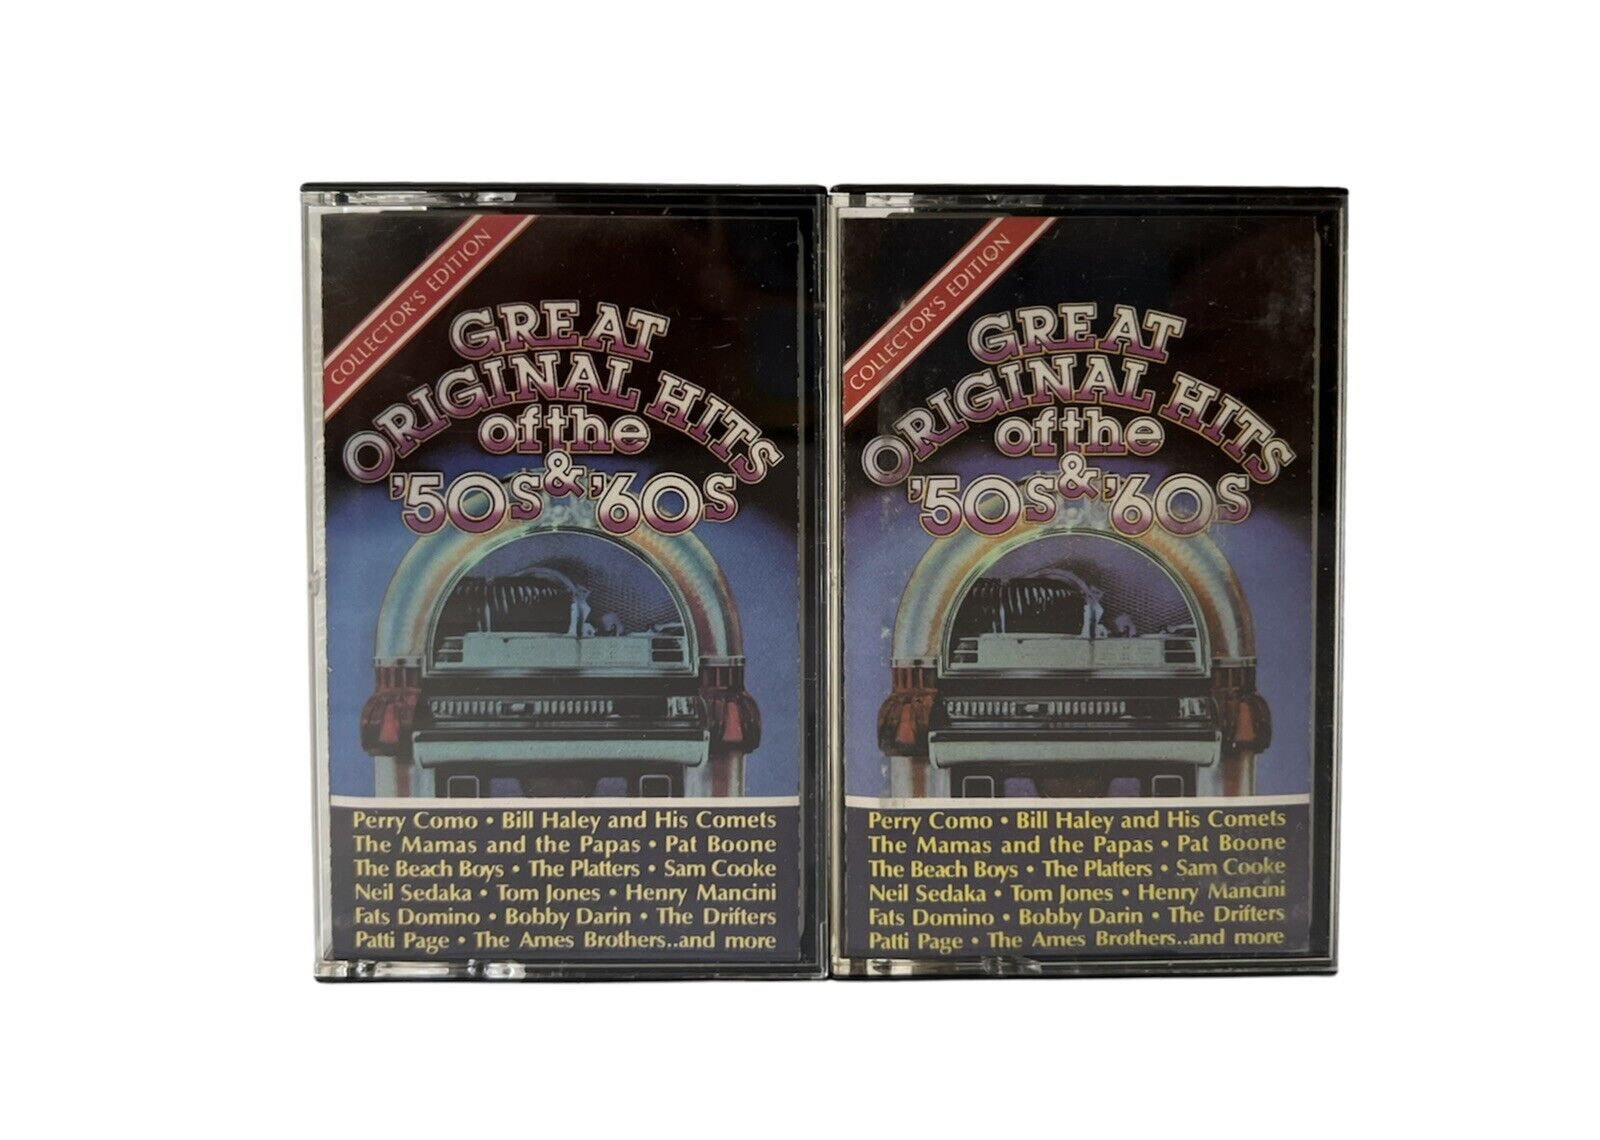 Vintage Great Original Hits Of The 50’s & 60’s 1985 Reader’s Digest Cassette 2-3